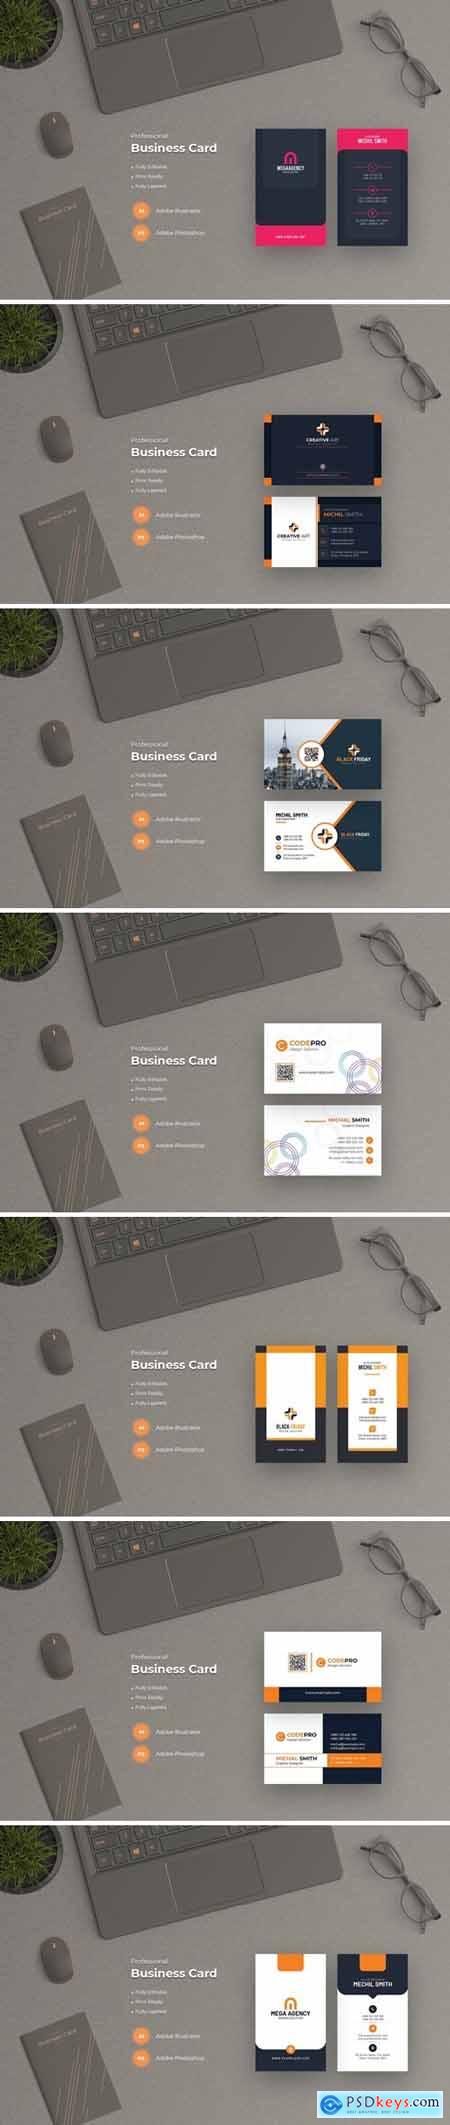 Multipurpose Business Card Template